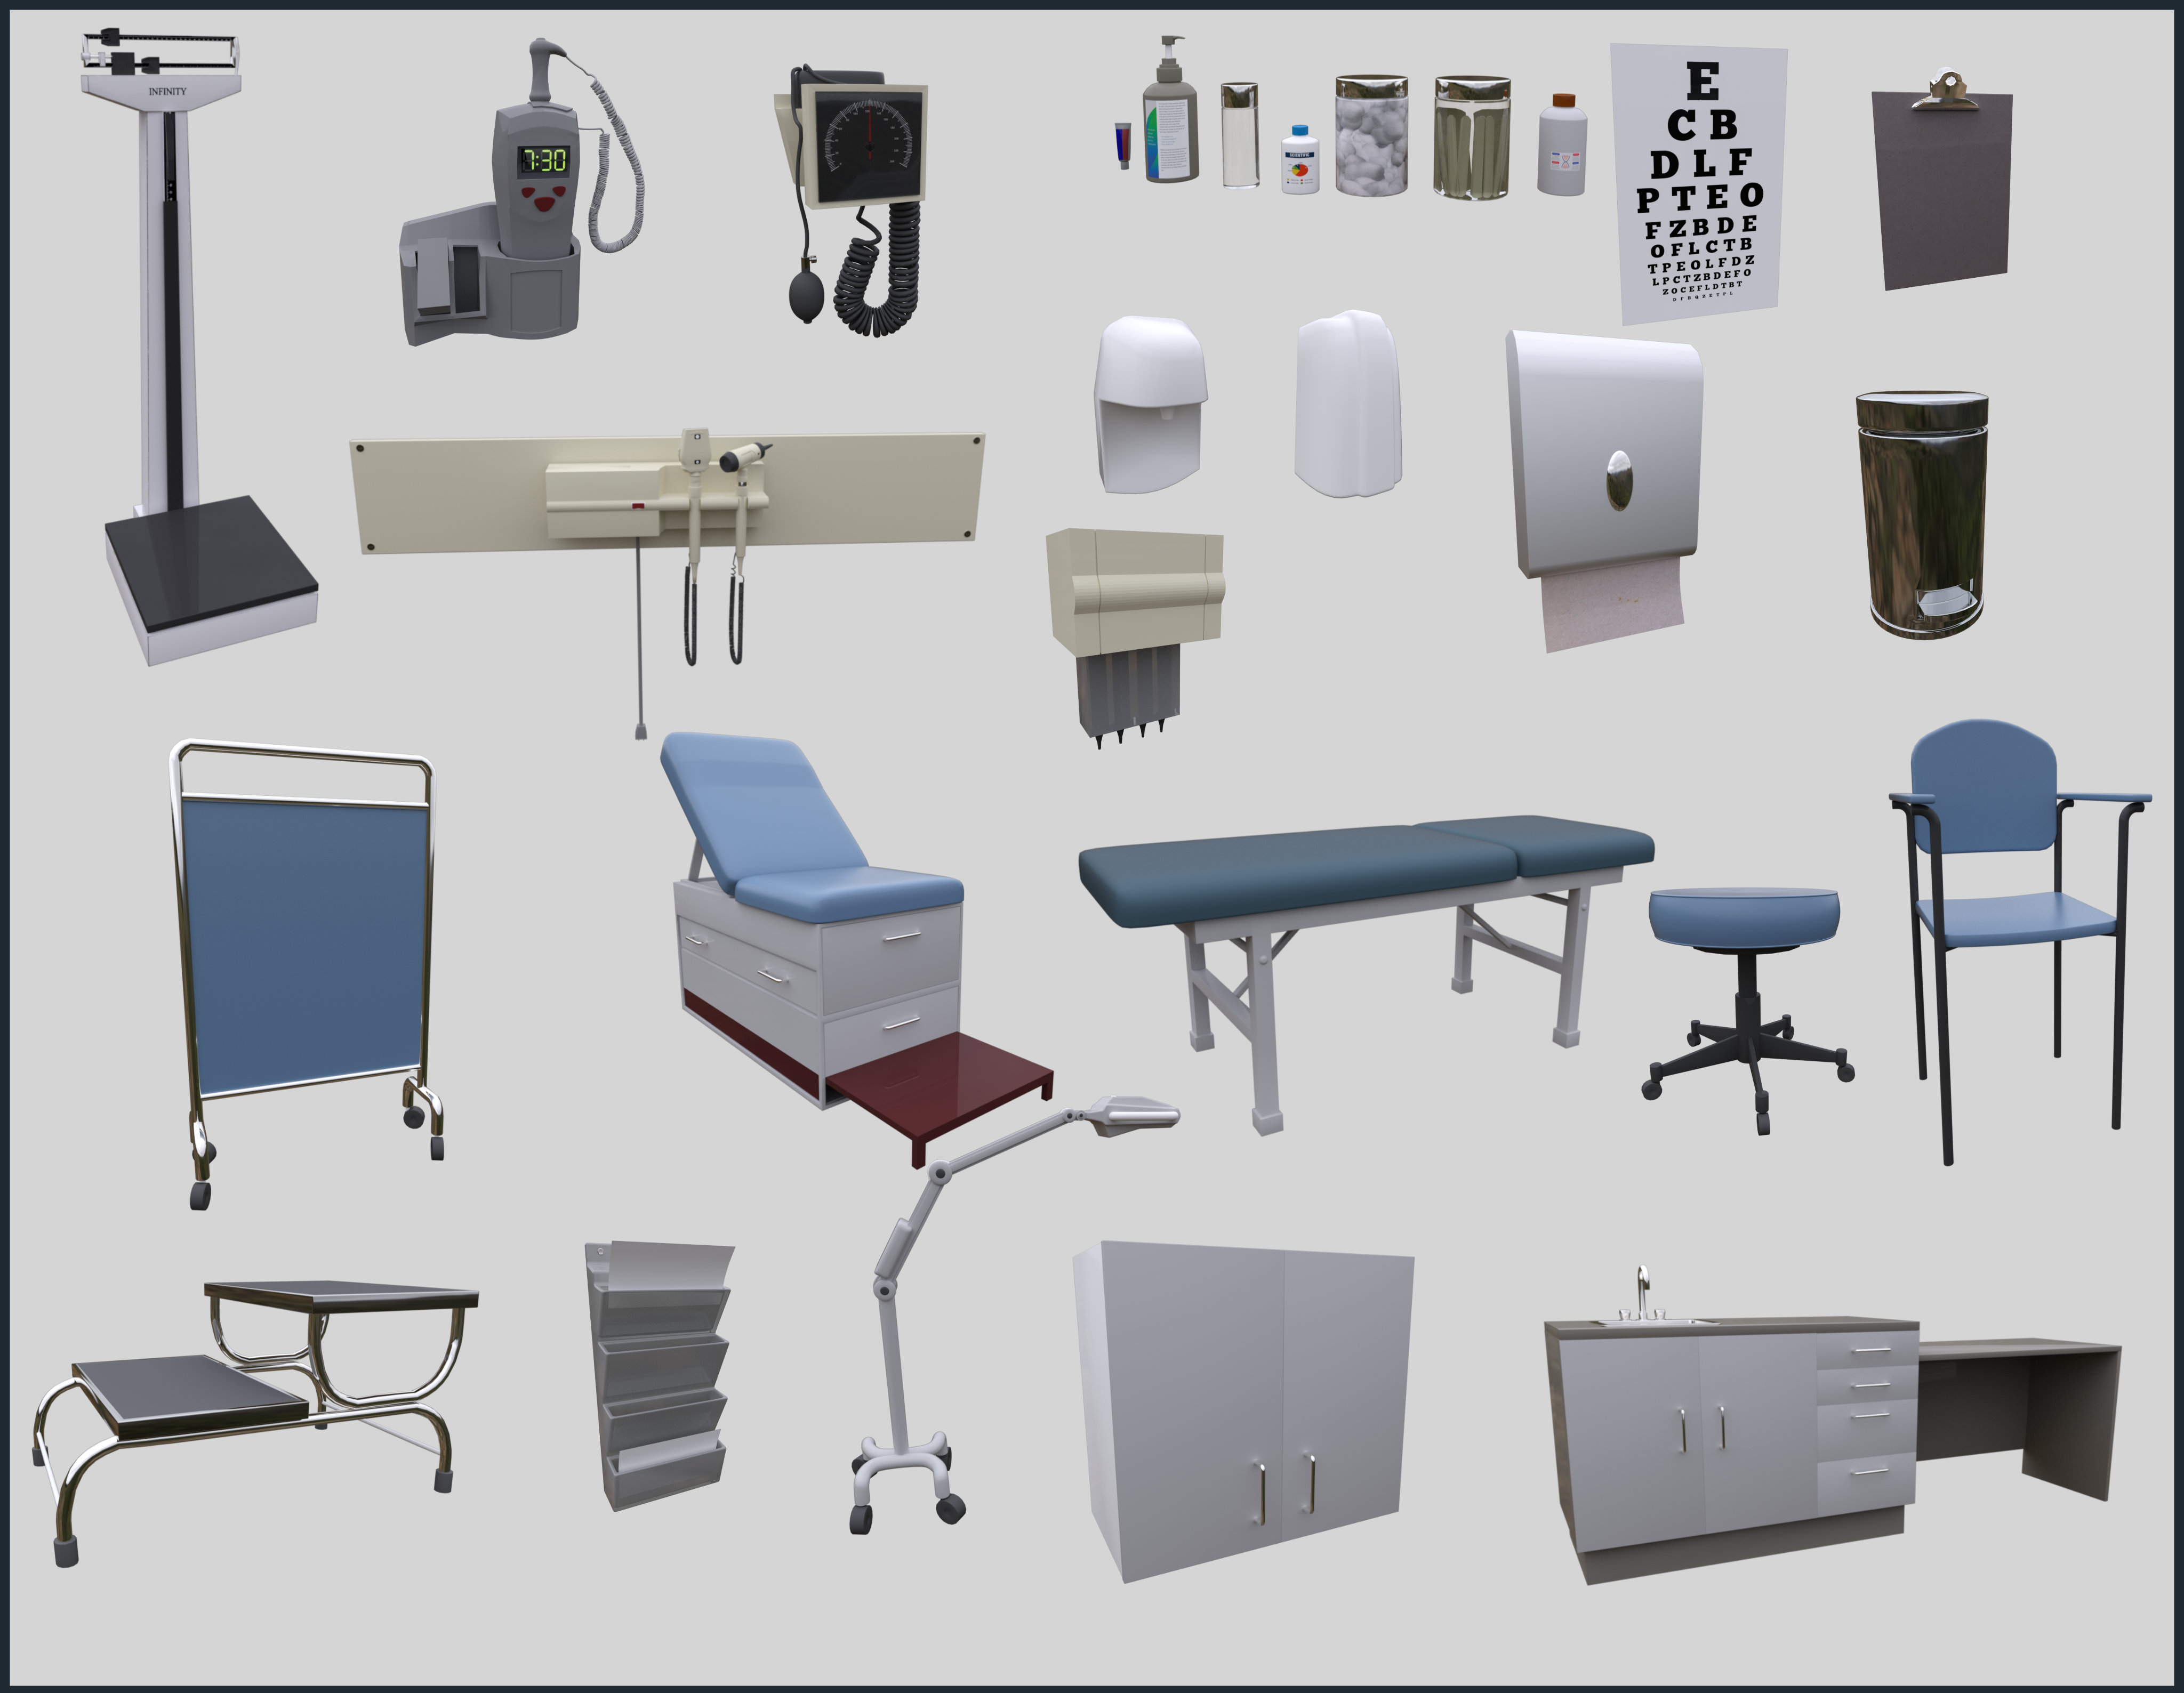 FG Examination Room by: Fugazi1968, 3D Models by Daz 3D